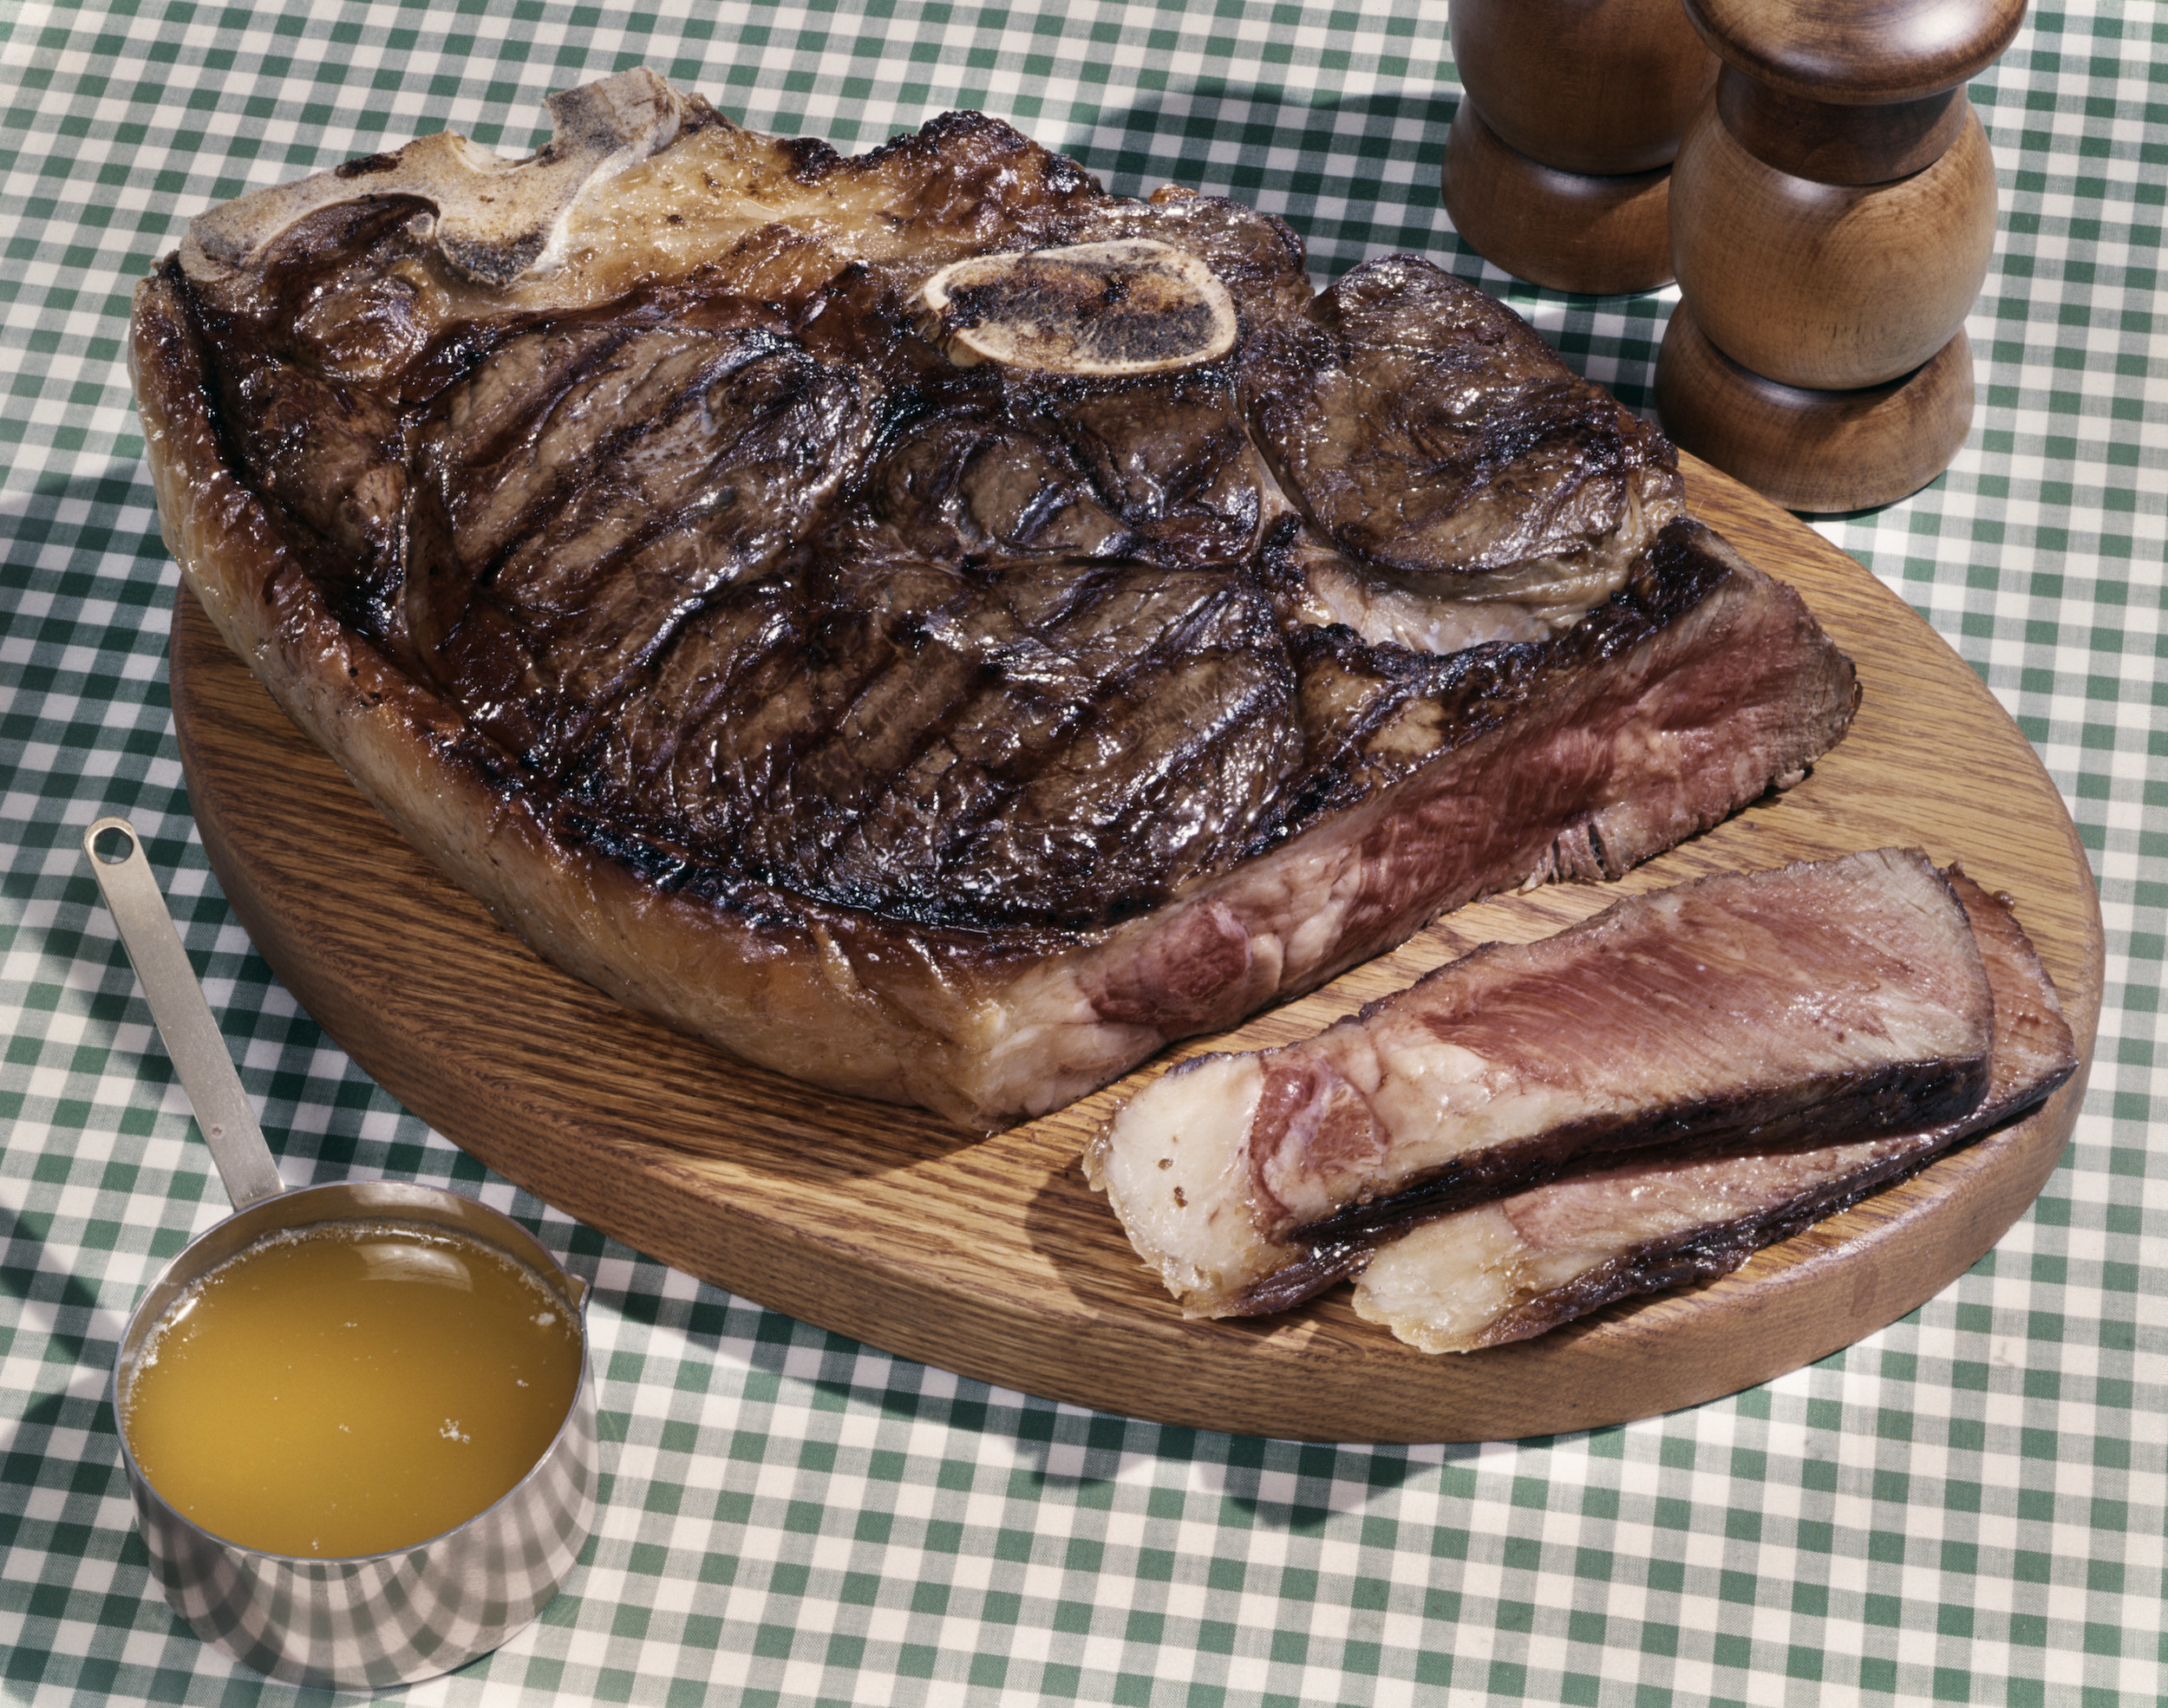 A steak on a wooden plate